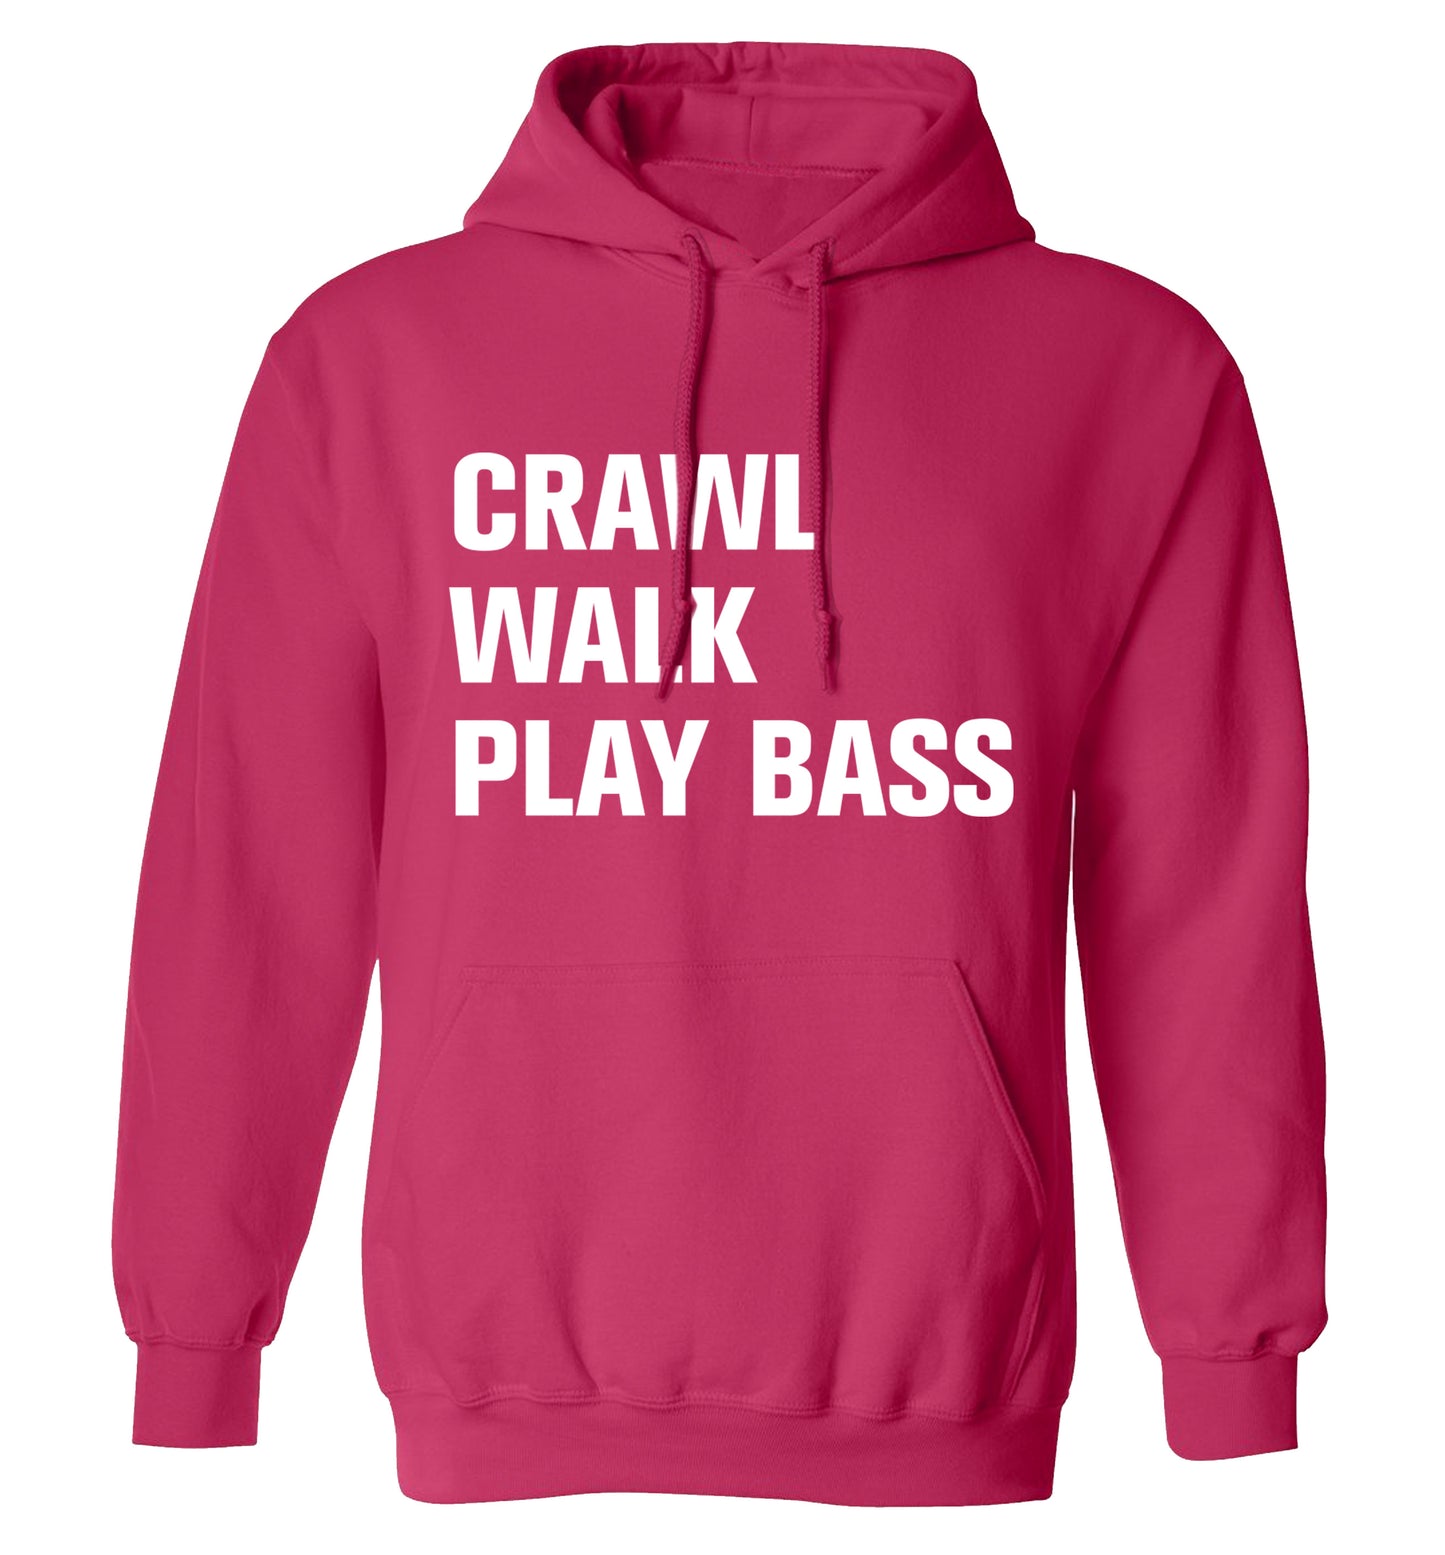 Crawl Walk Play Bass adults unisex pink hoodie 2XL